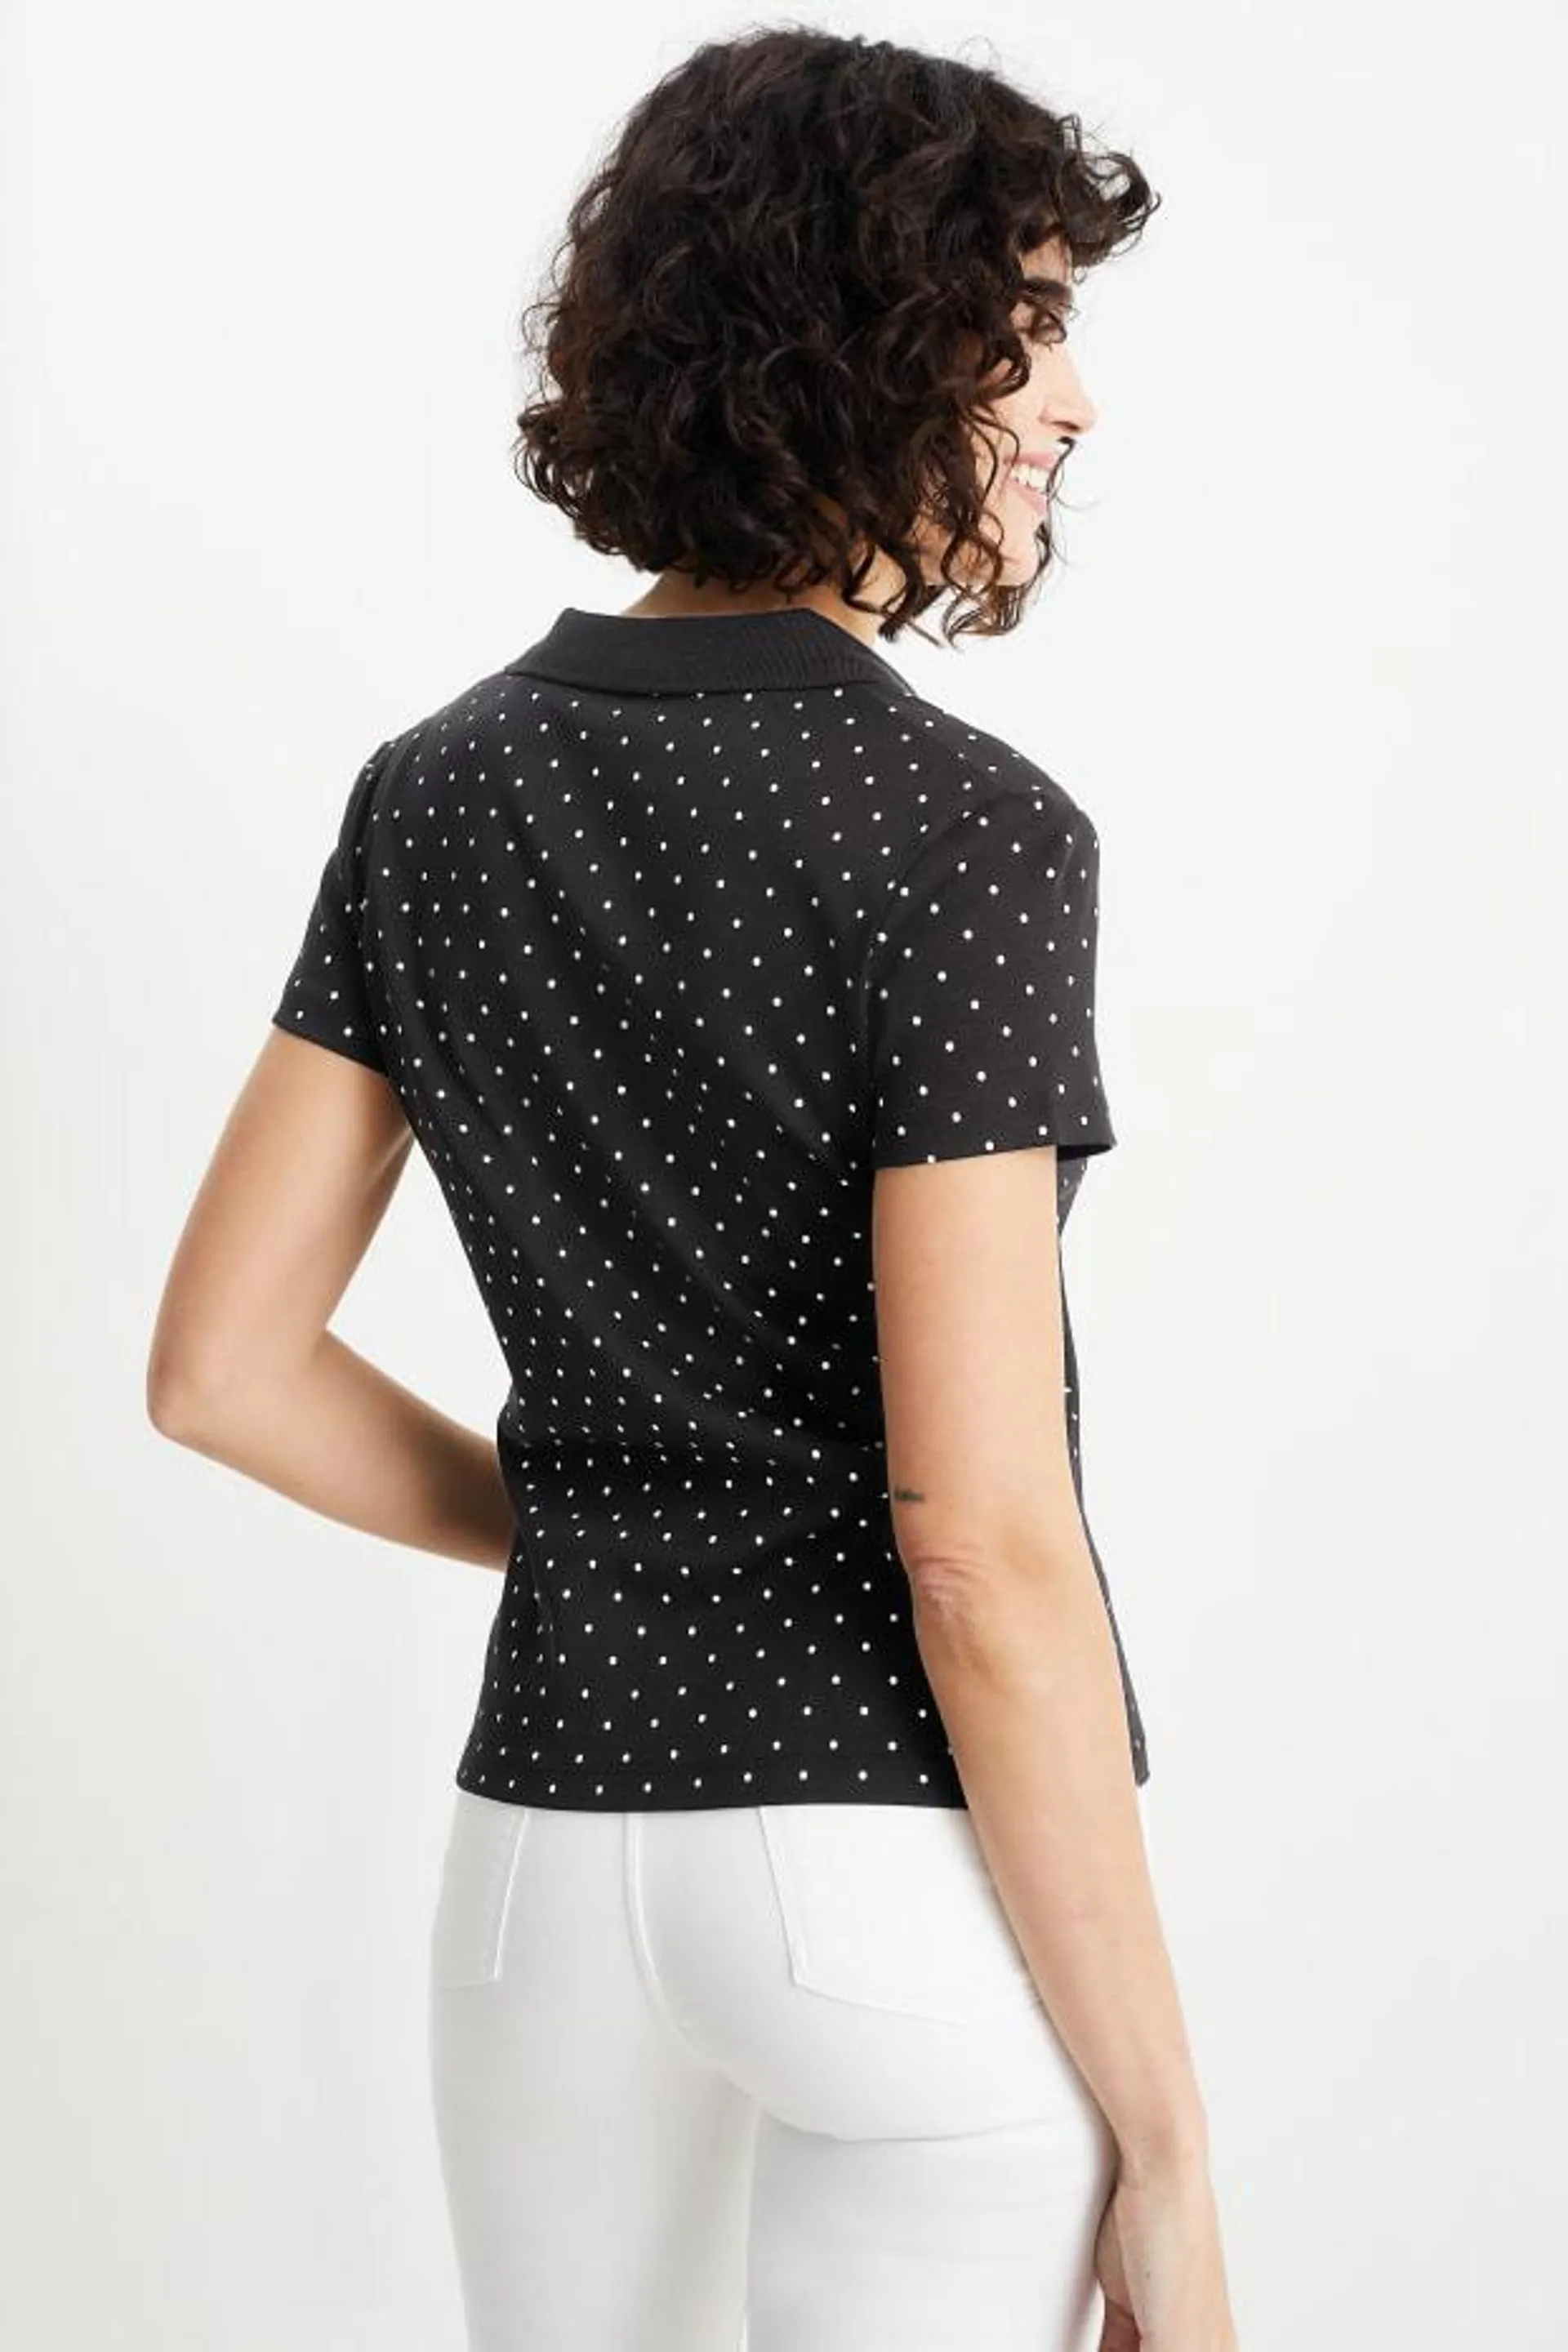 Basic polo shirt - polka dot